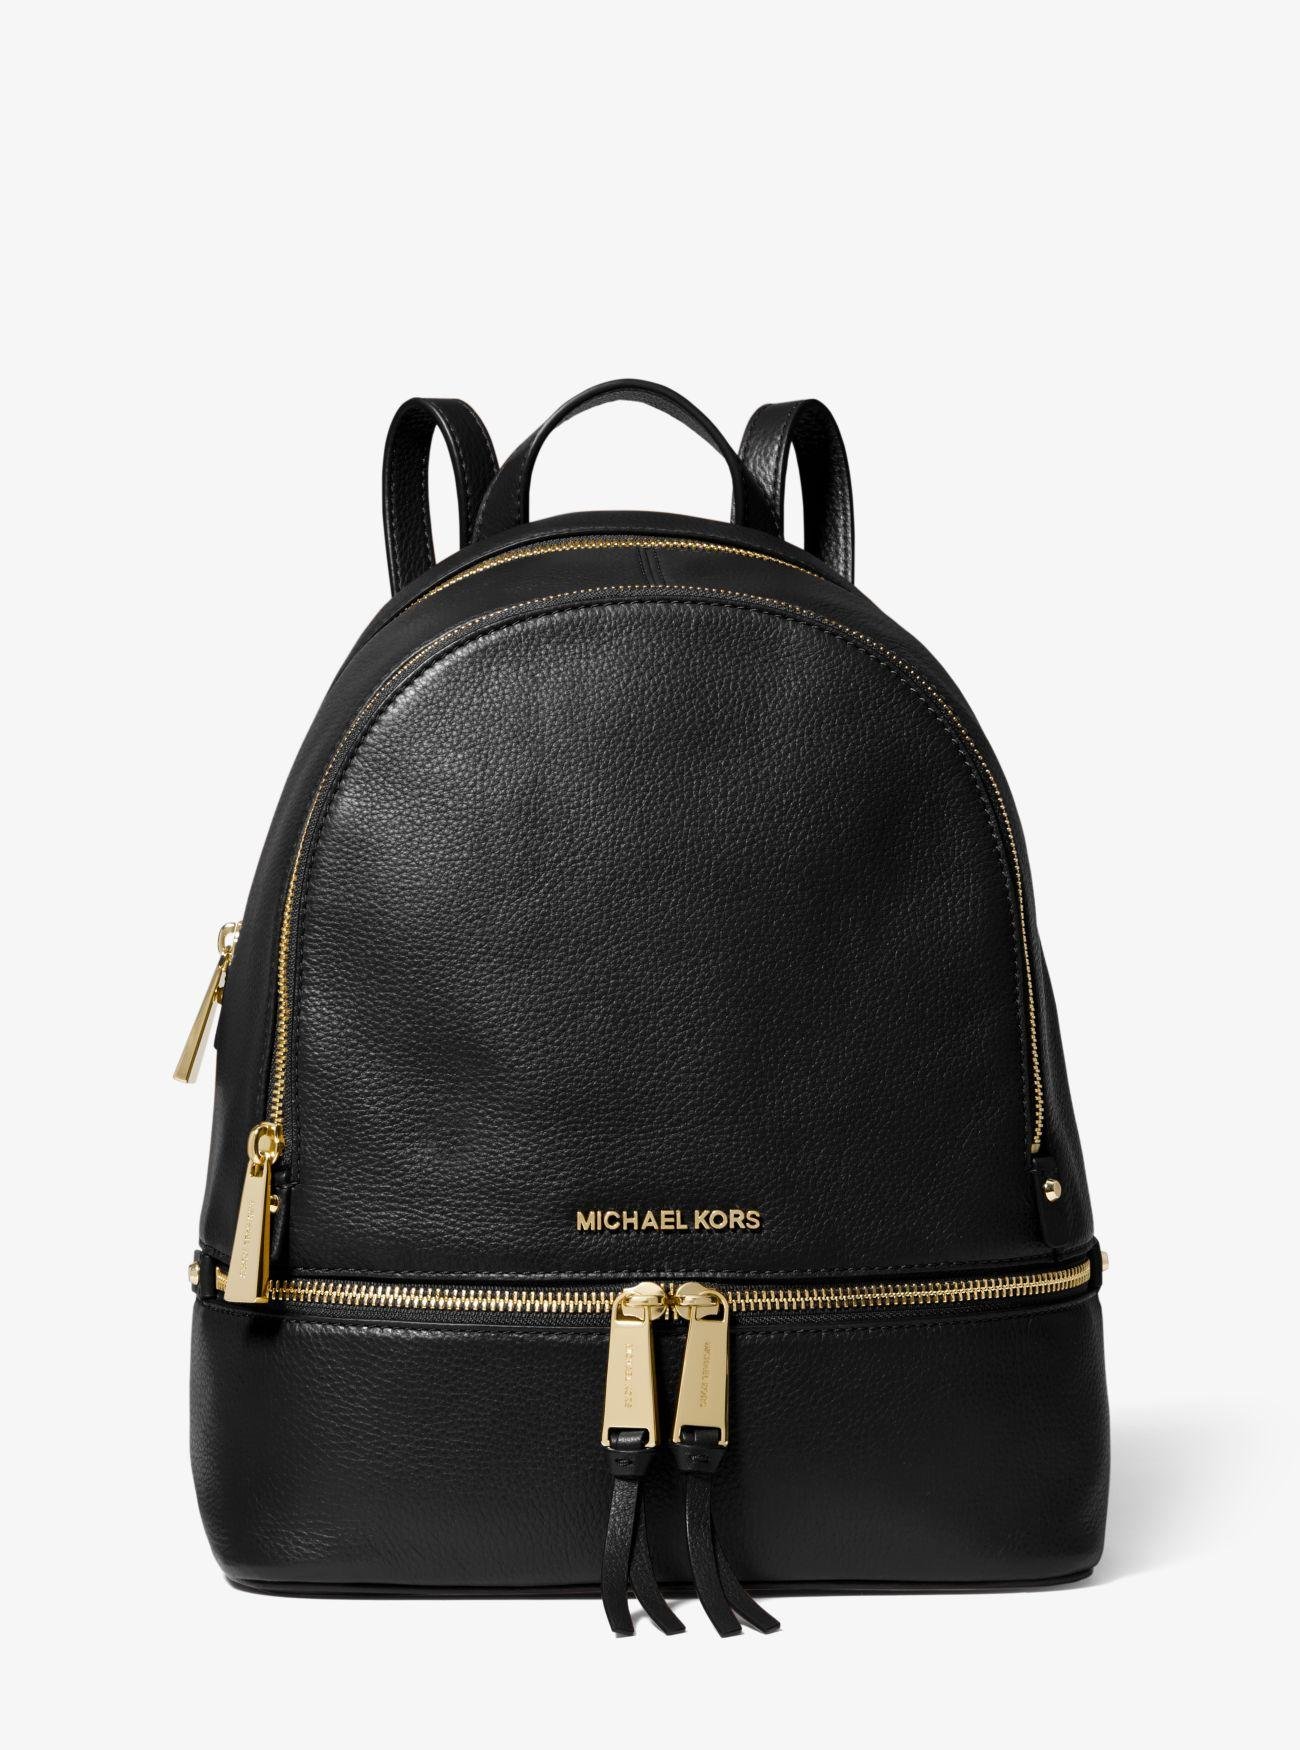 Michael Kors Rhea Medium Leather Backpack in Black - Lyst